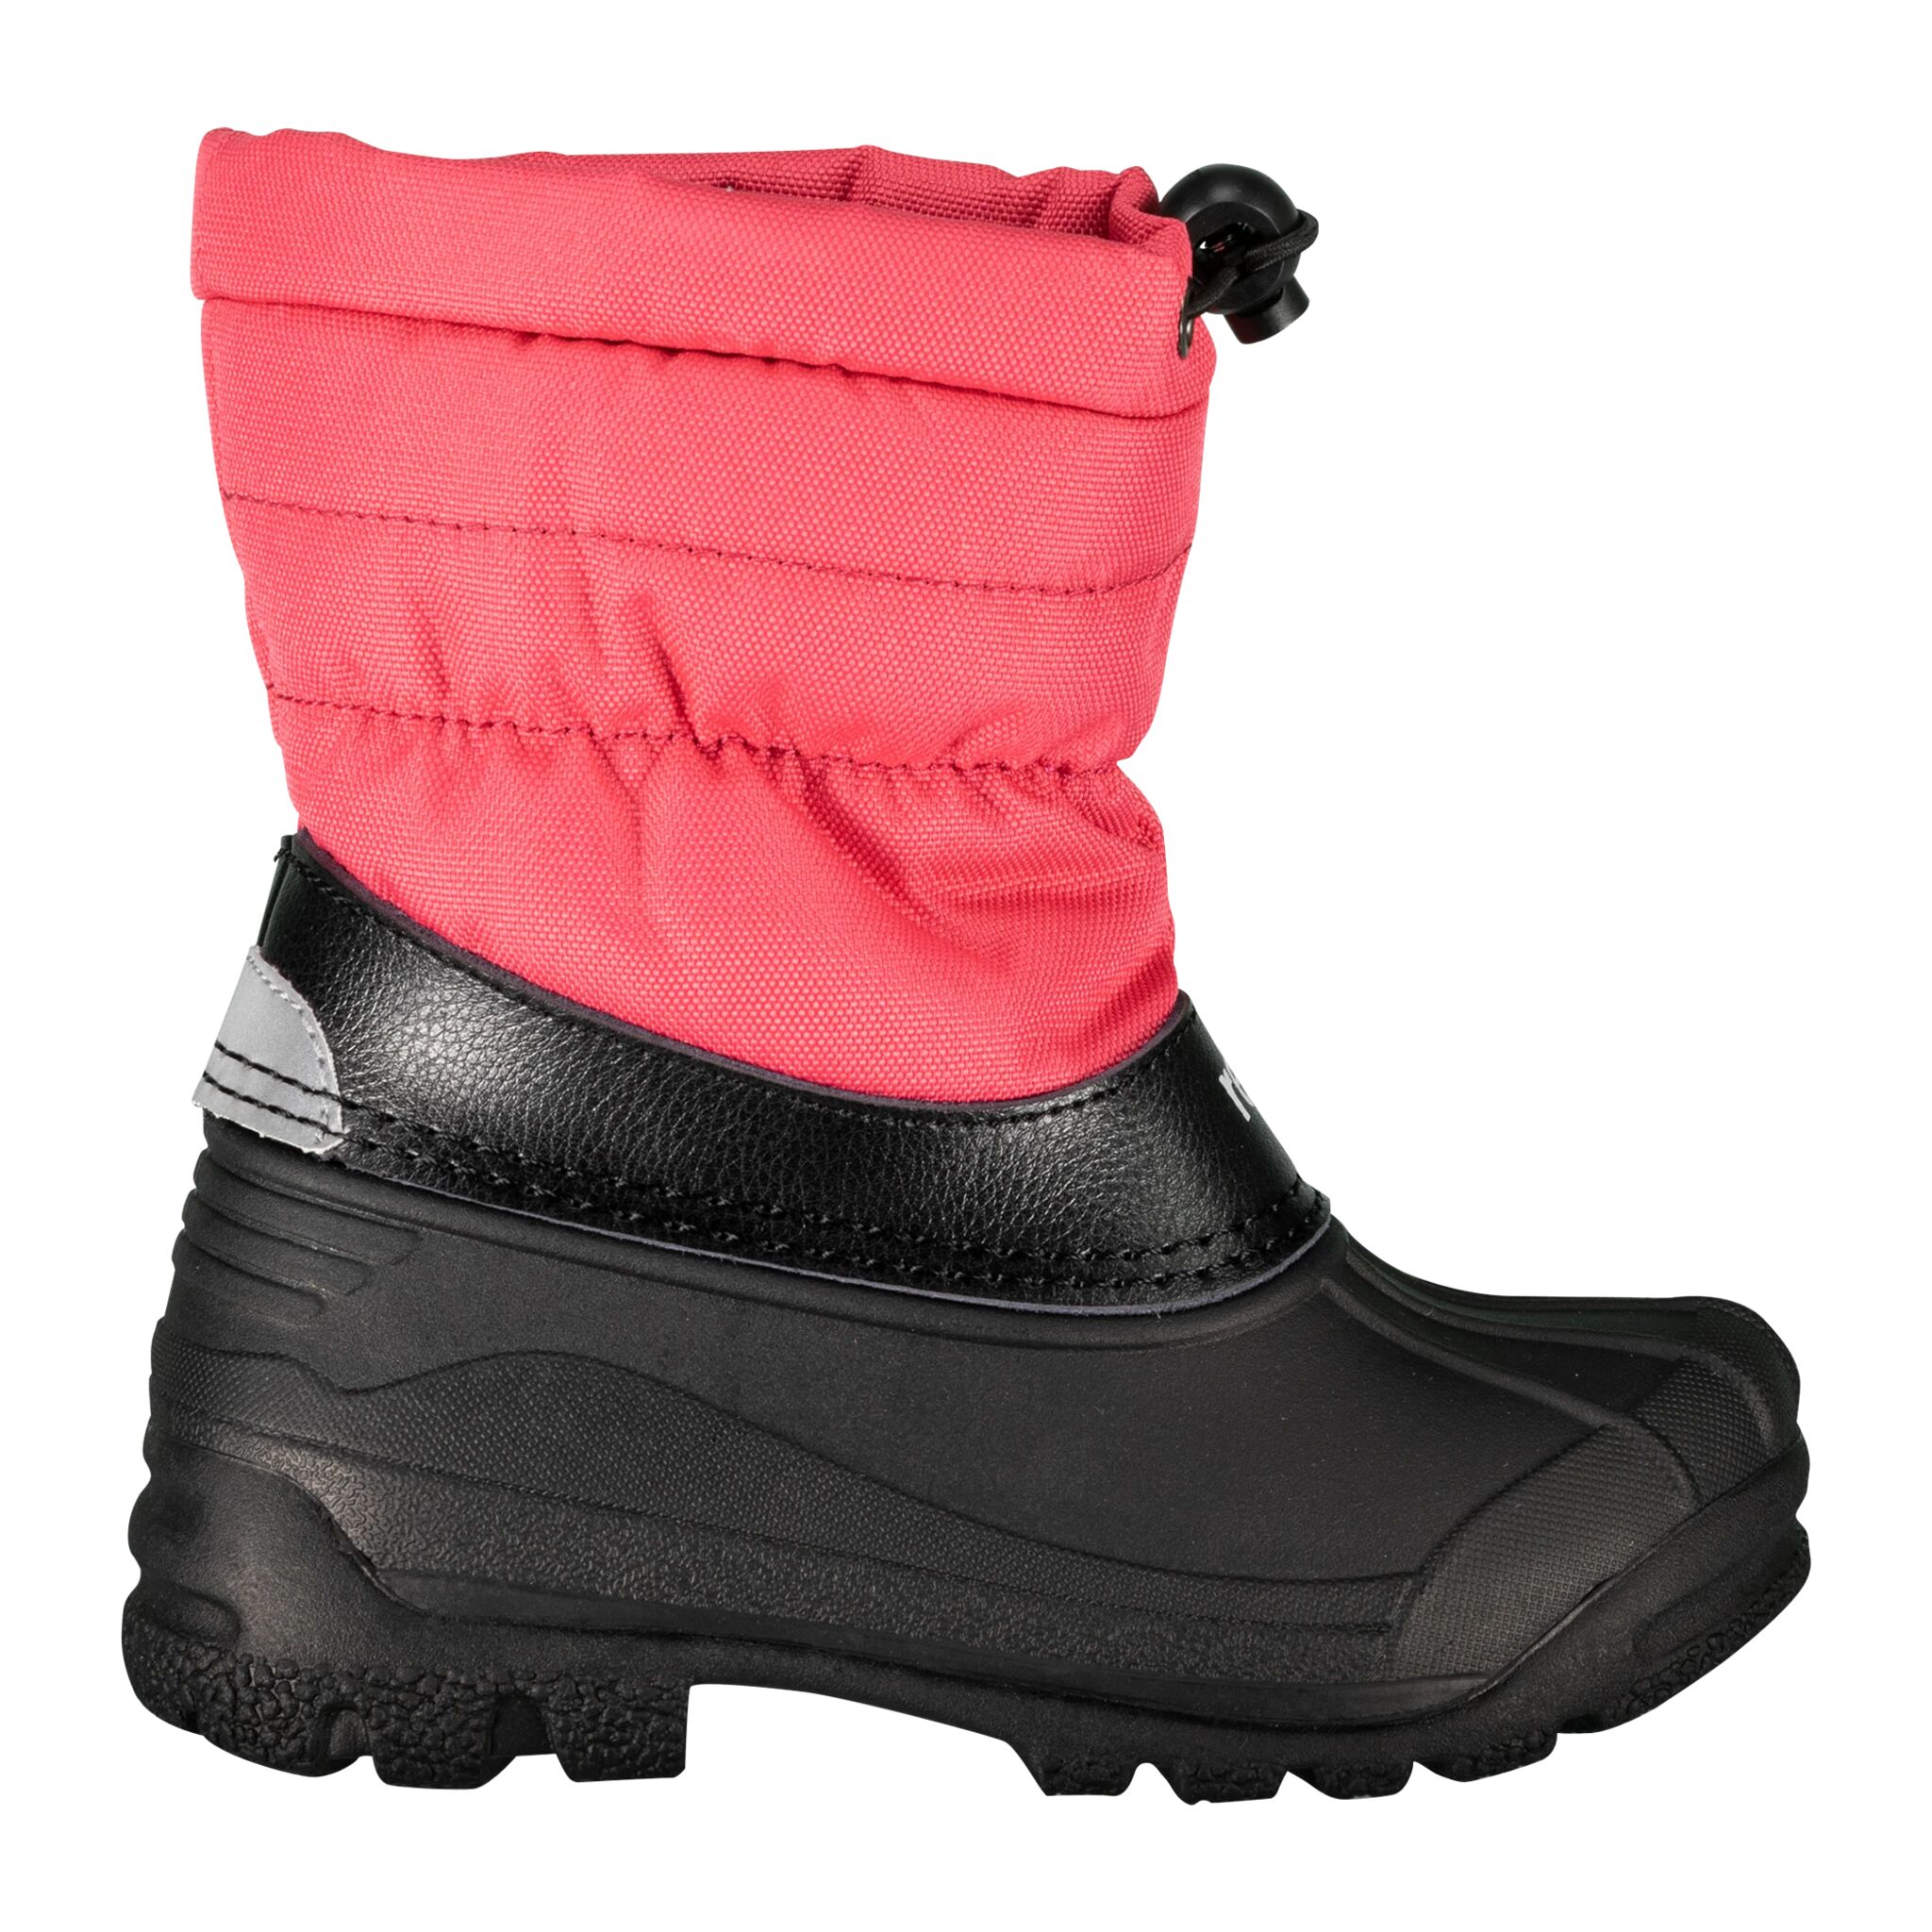 Reima Winter boots Nefar, vintersko barn 27 Azalea Pink